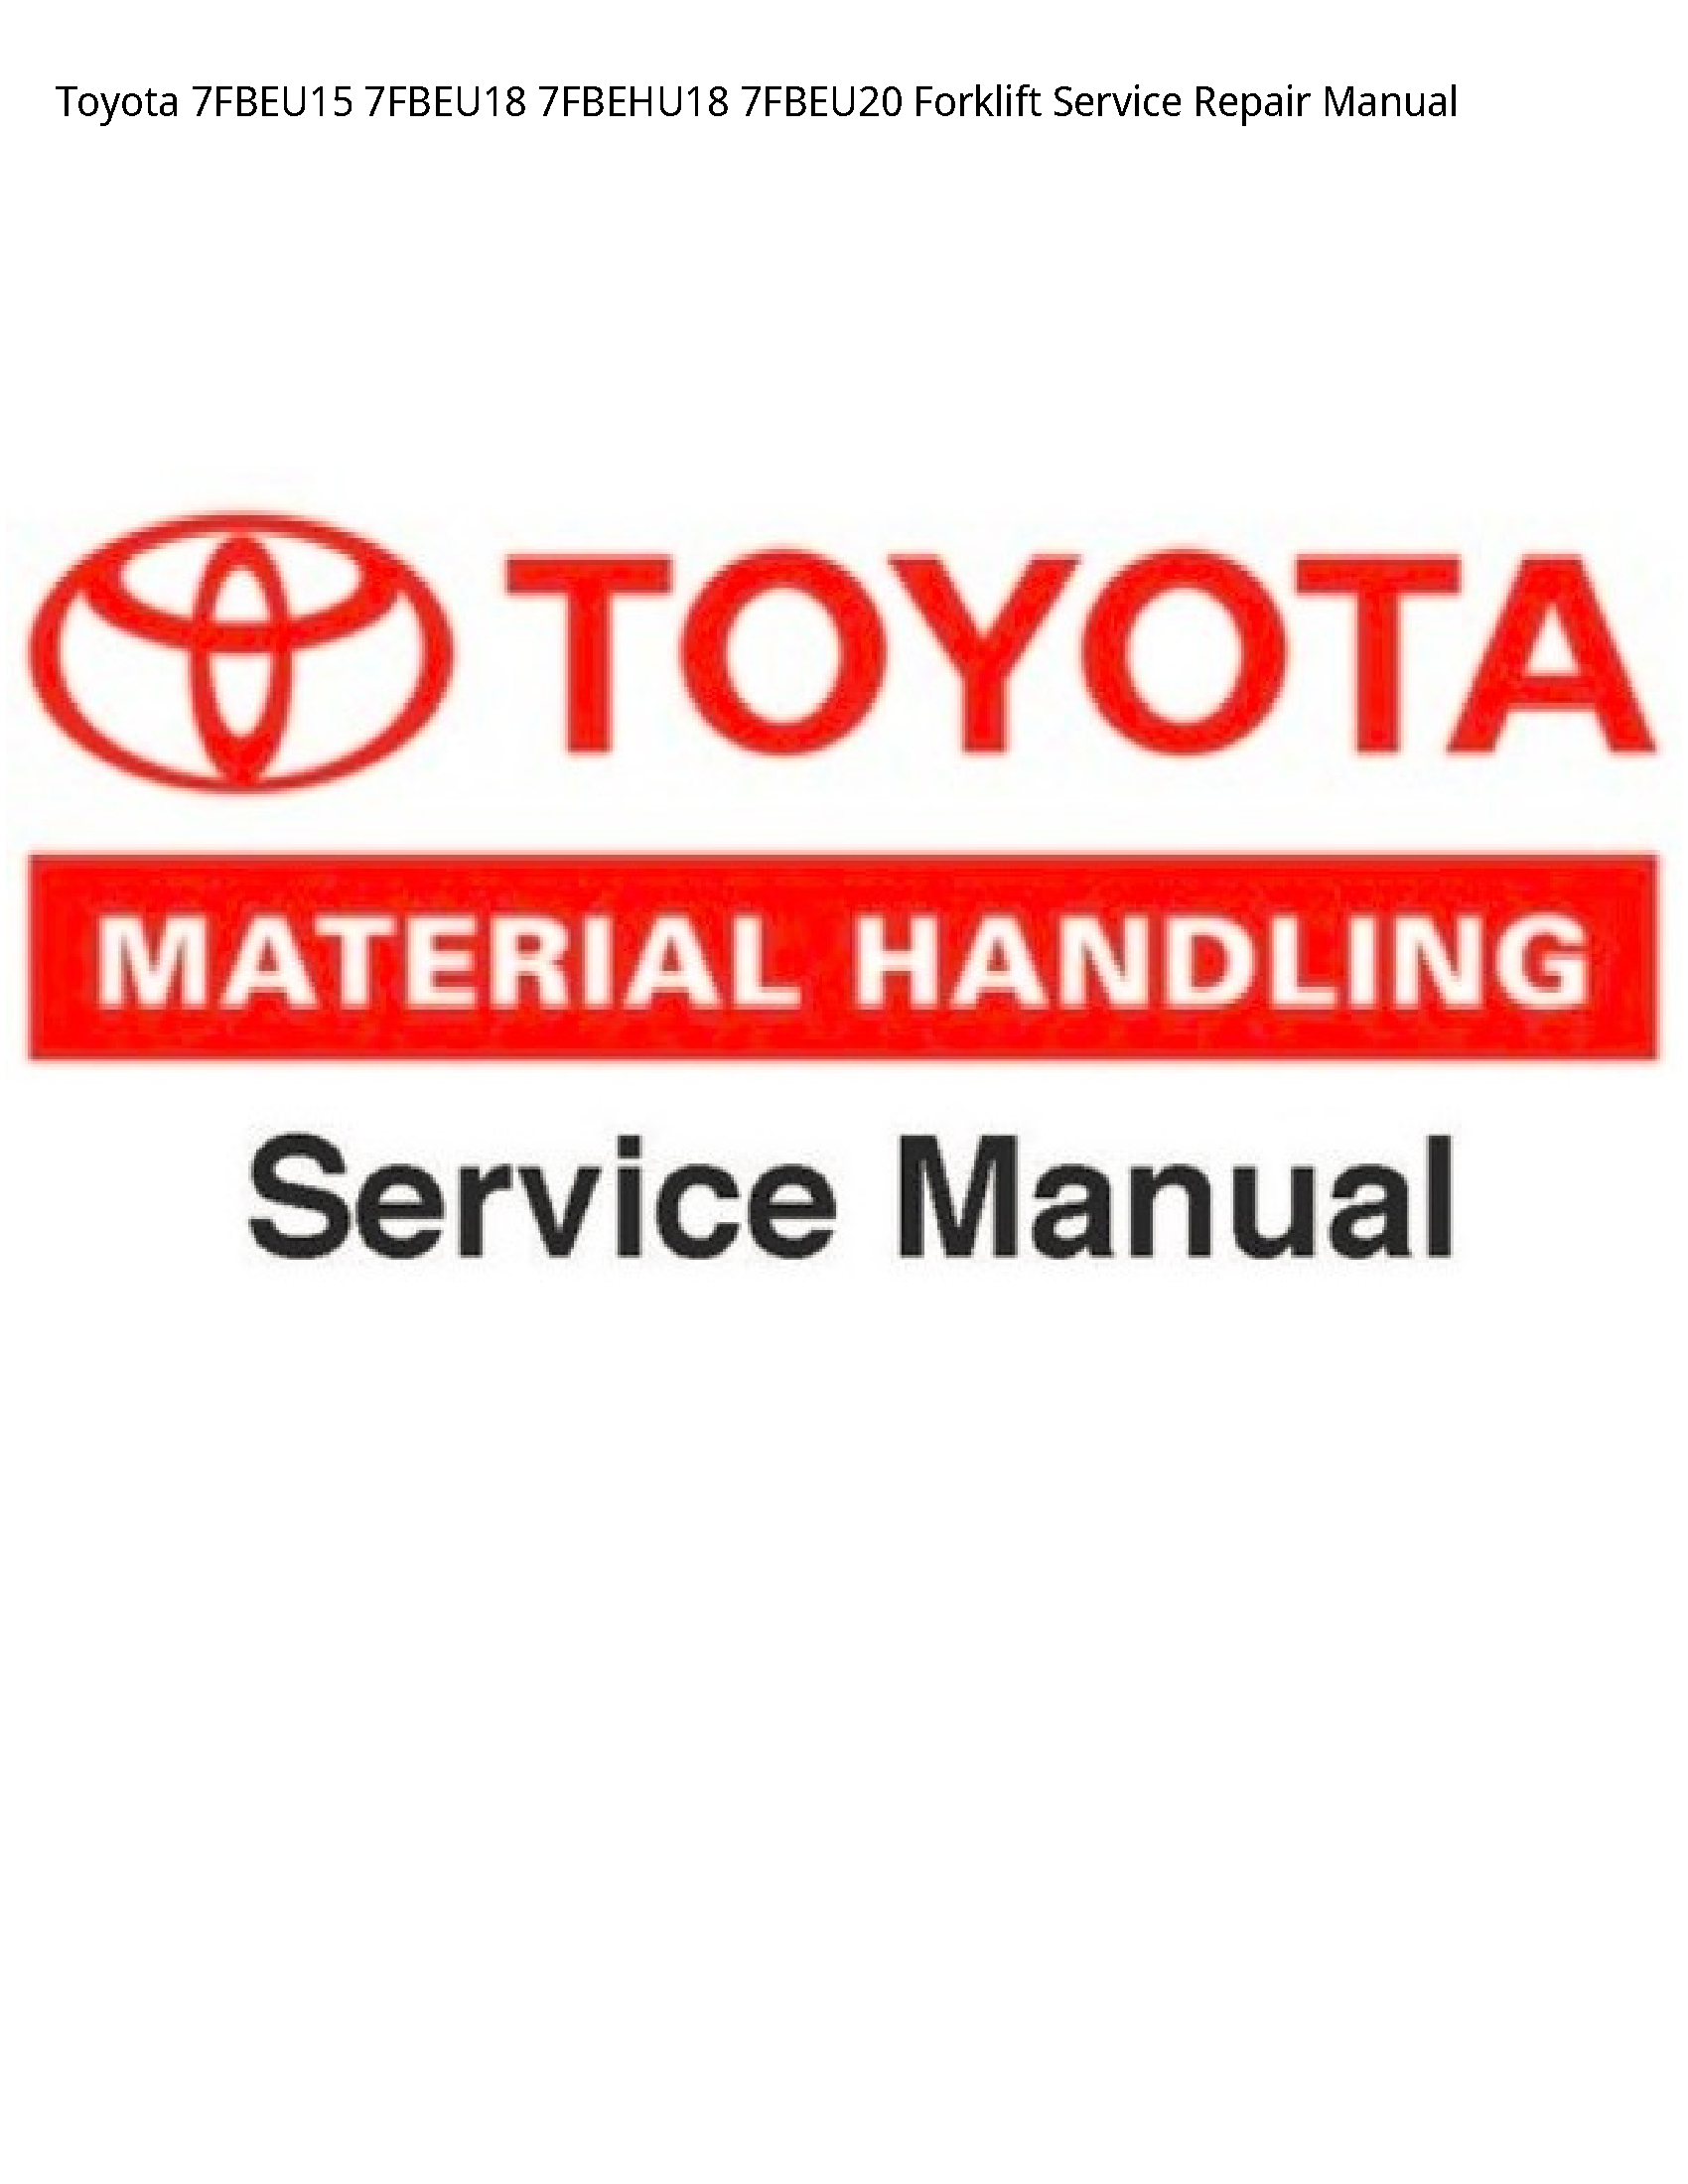 Toyota 7FBEU15 Forklift manual